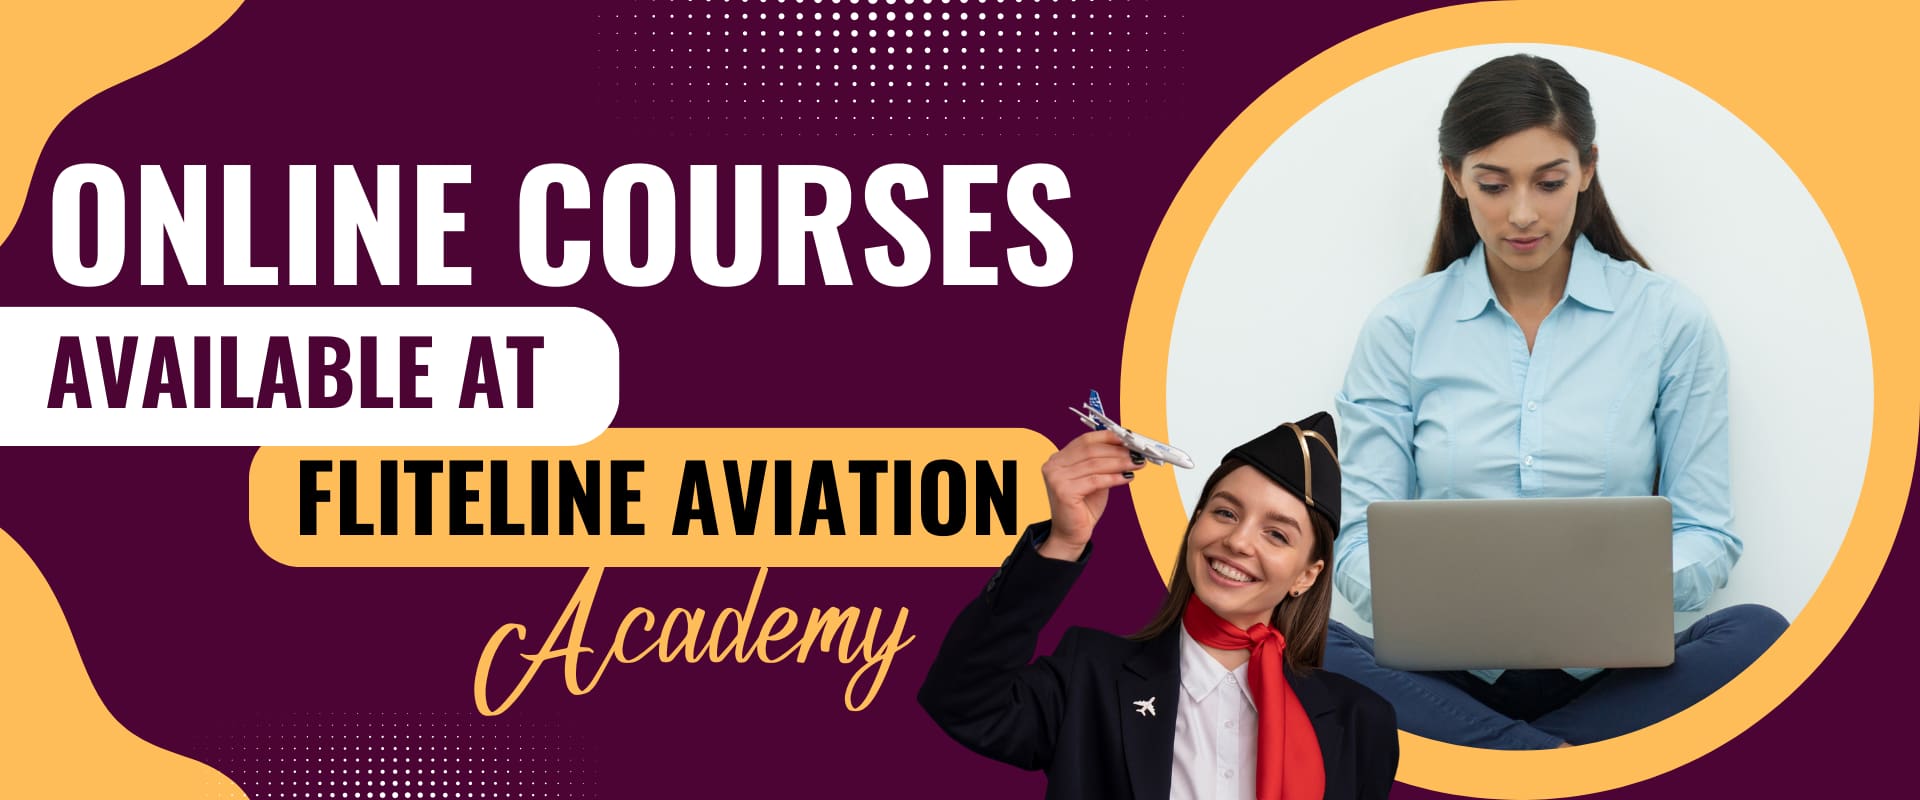 fliteline-aviation-online-courses